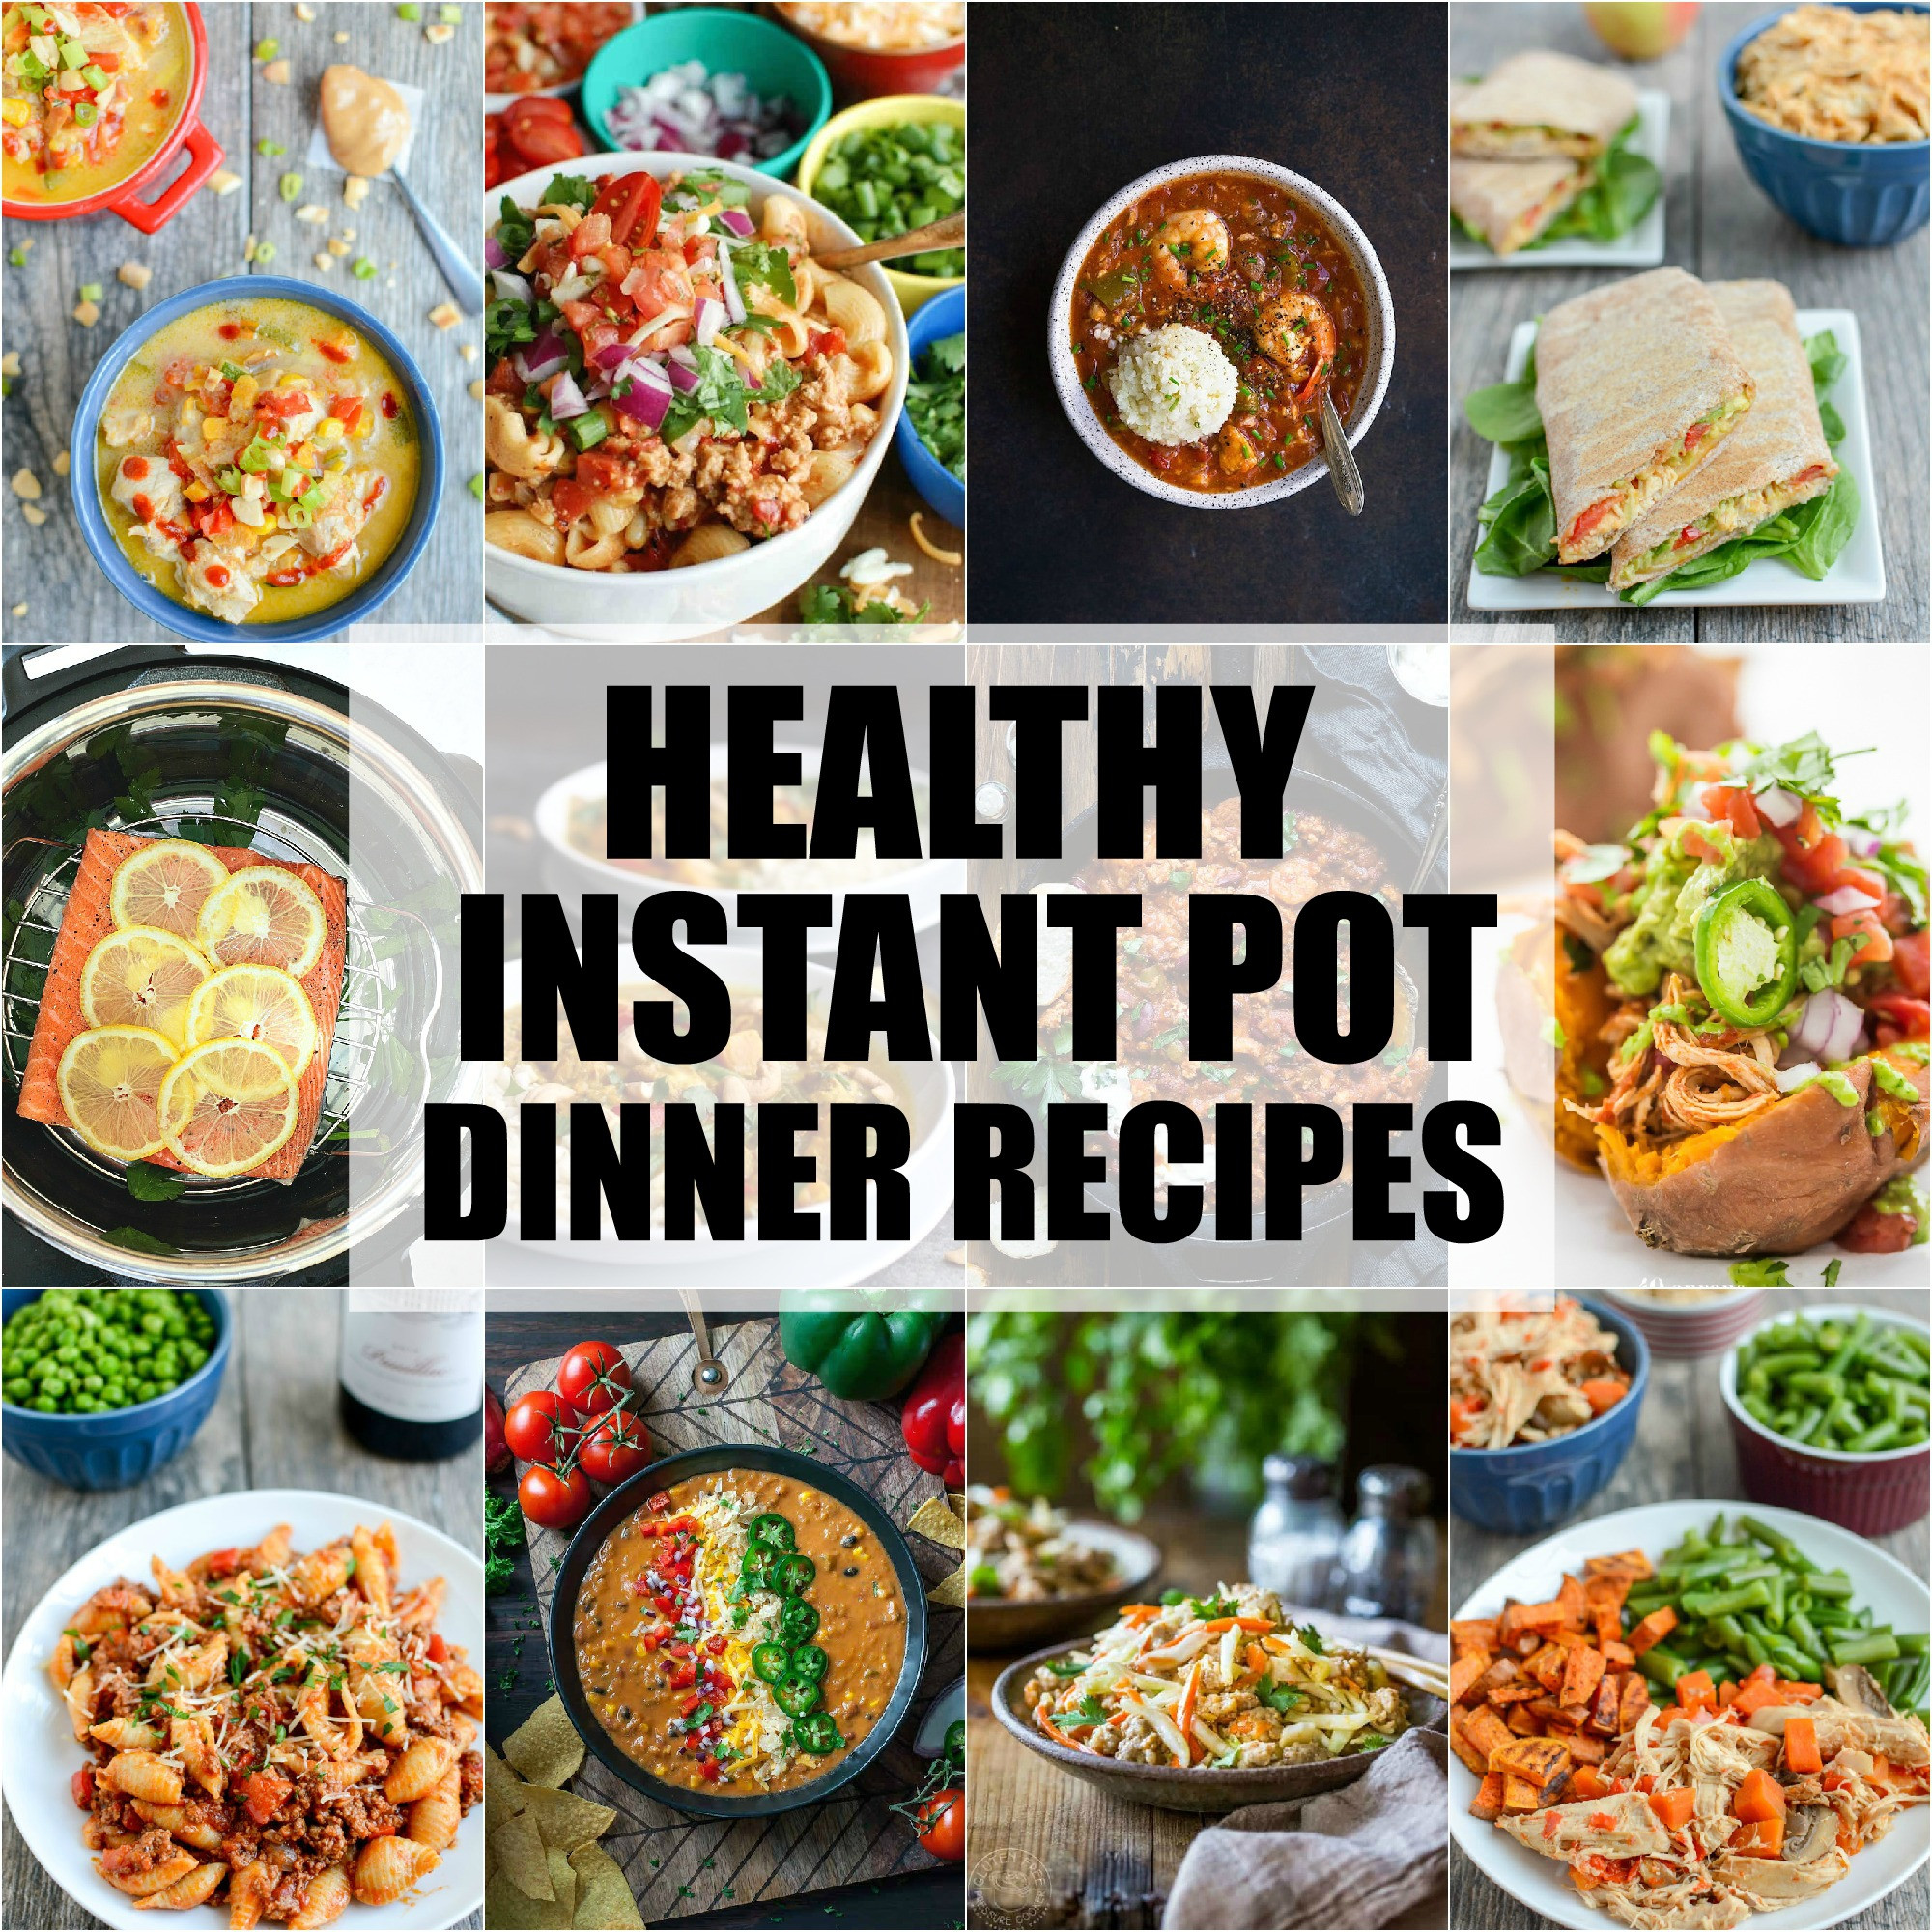 Instant Pot Dinner Recipes
 Healthy Instant Pot Dinner Recipes